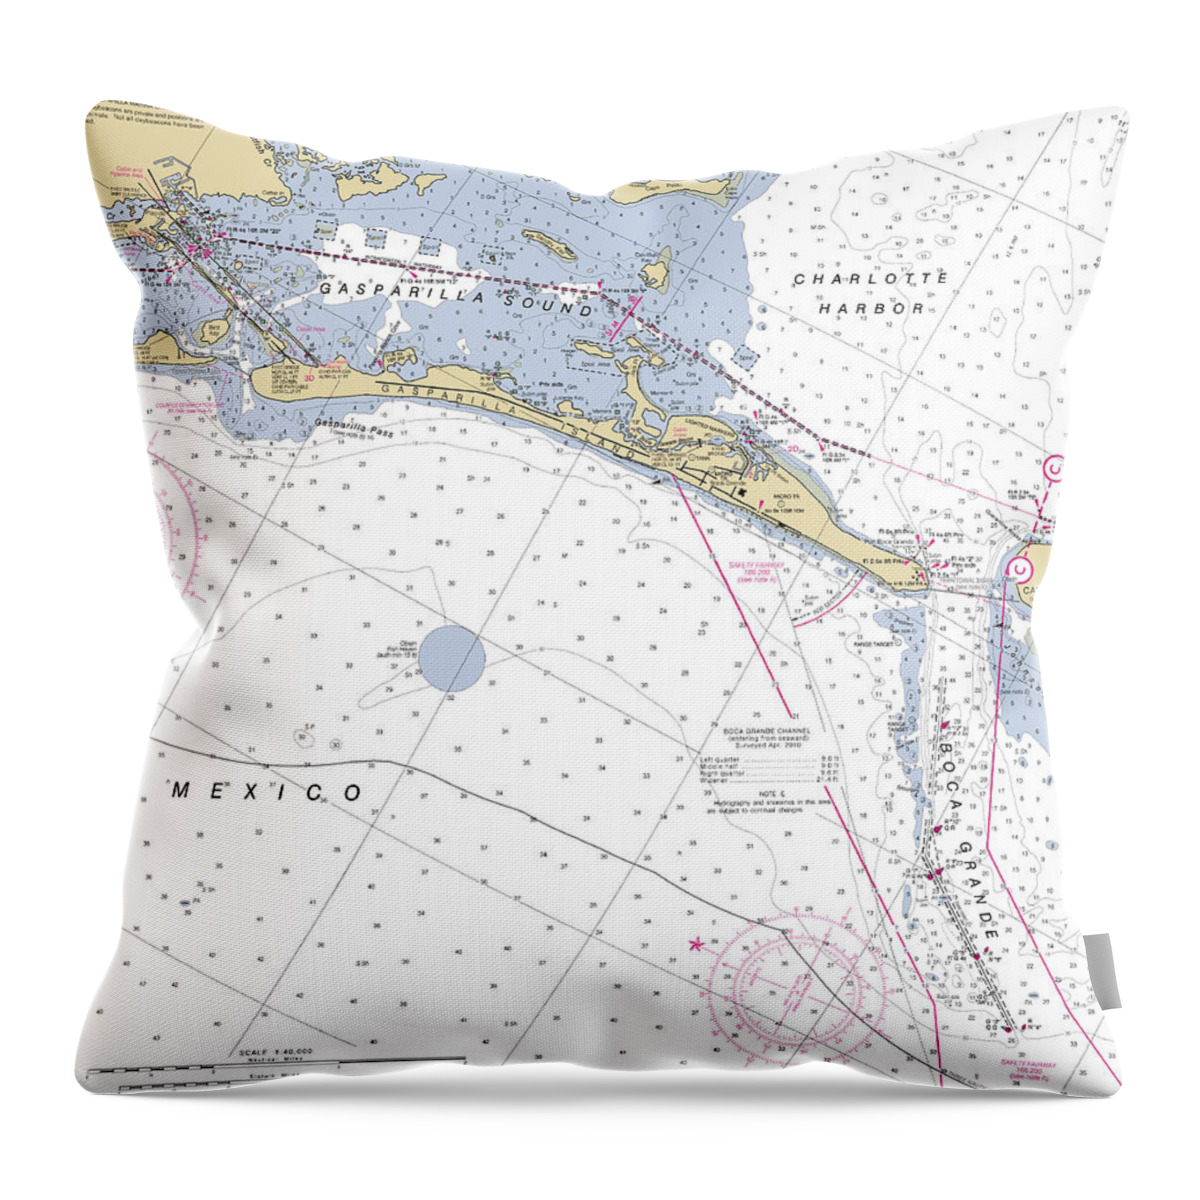 Gasparilla Island Florida Throw Pillow featuring the digital art Gasparilla Island Florida, NOAA Chart 11425_1 by Nautical Chartworks